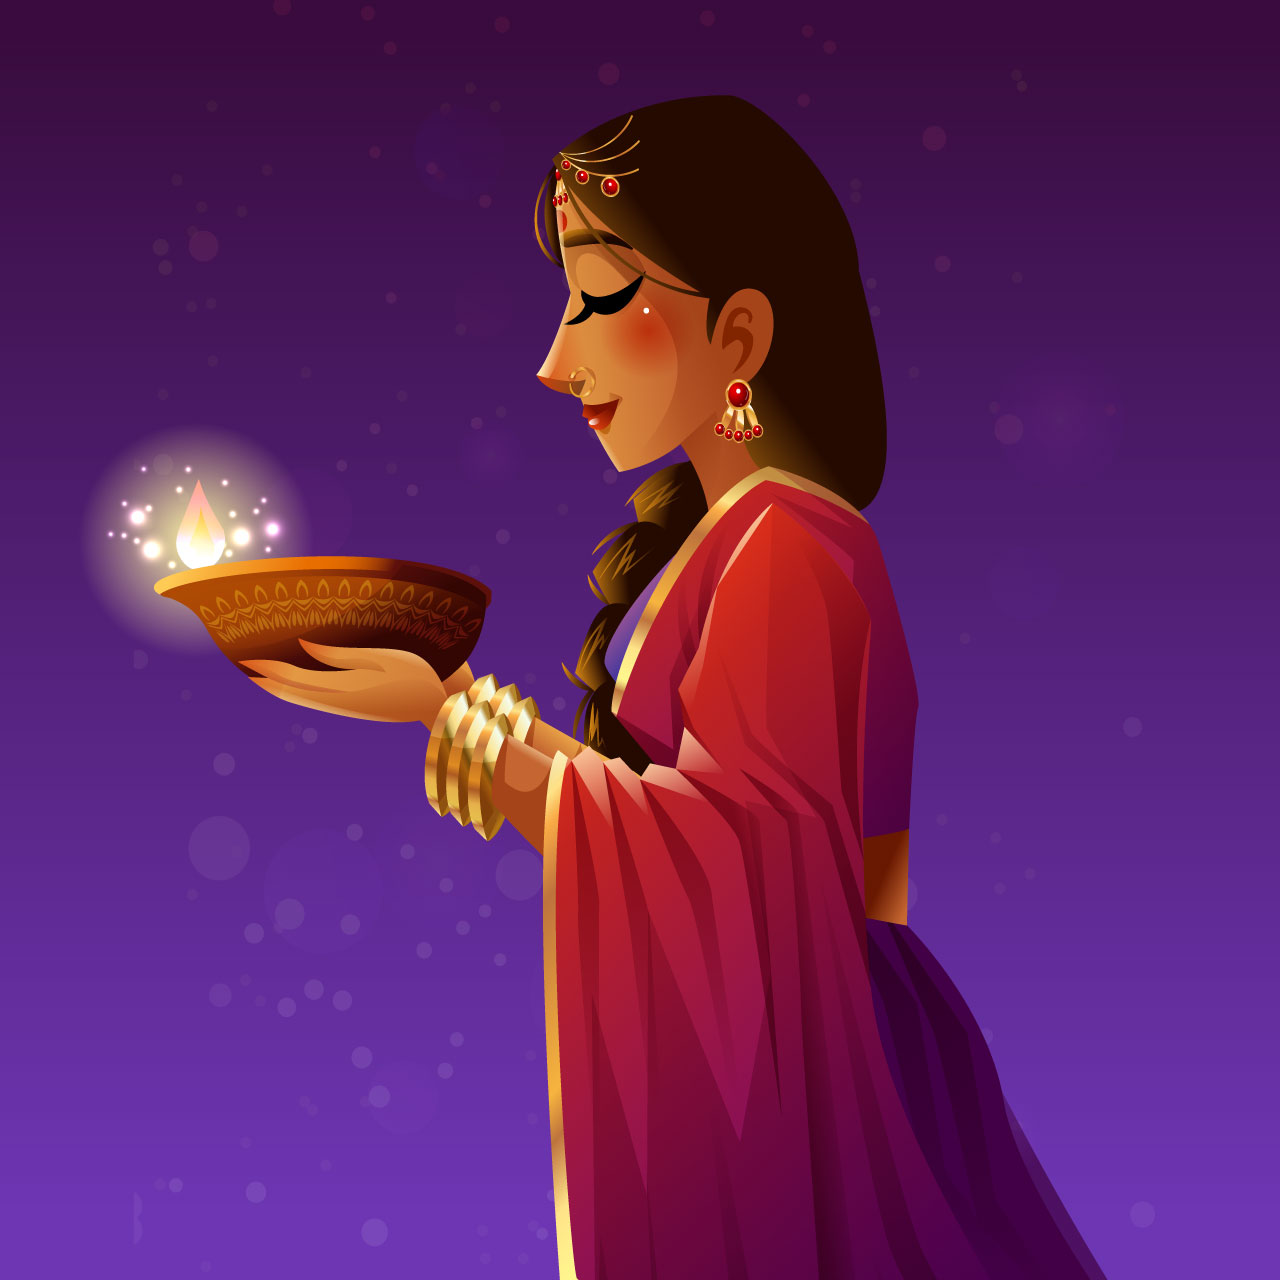 Indian woman celebrating diwali festival cartoon illustration image